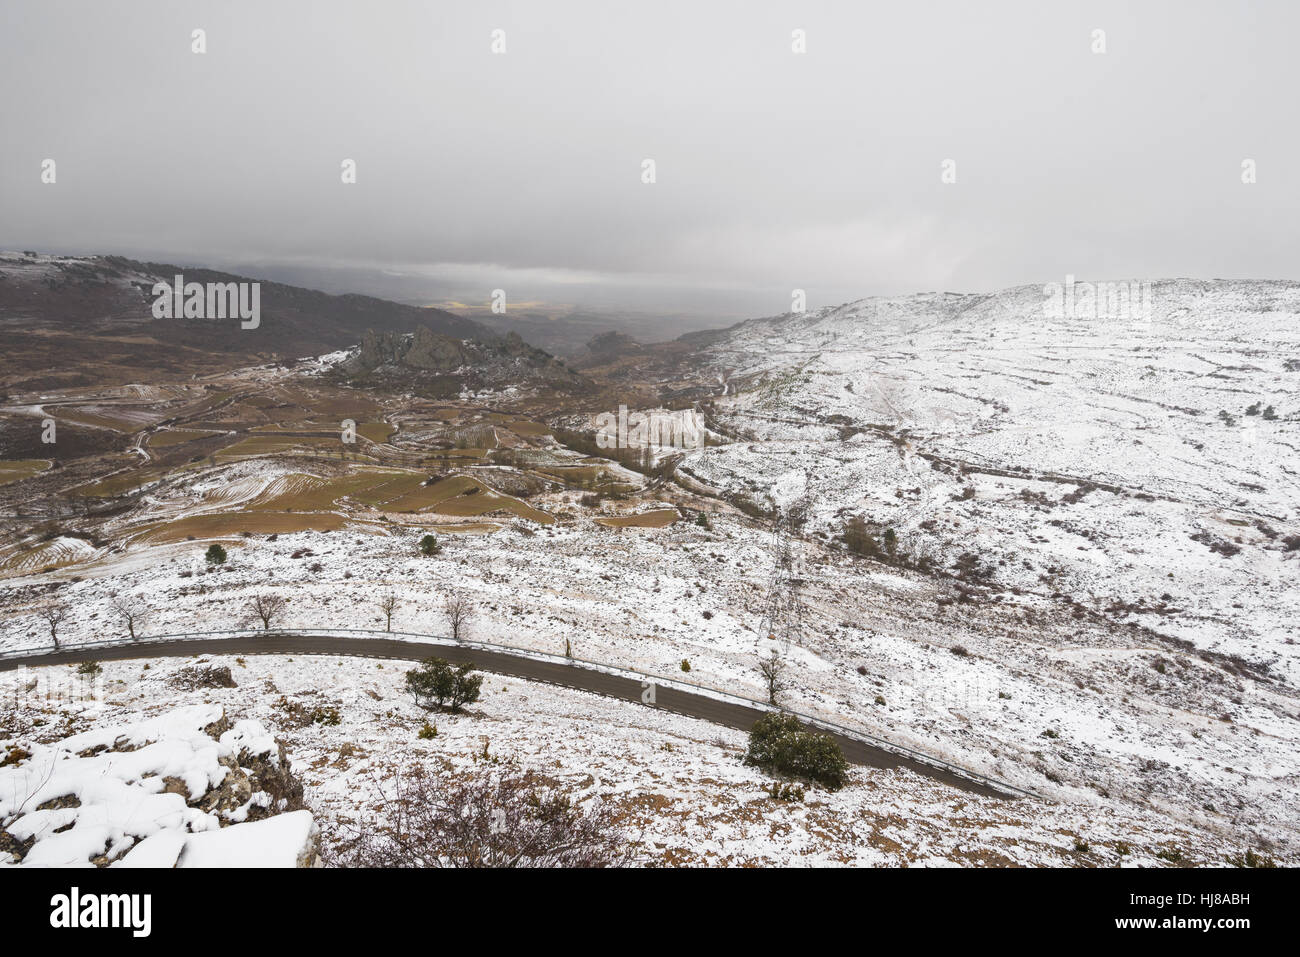 Snowed landscape of Paramo de Masa mountains, in north Burgos province, Spain. Stock Photo